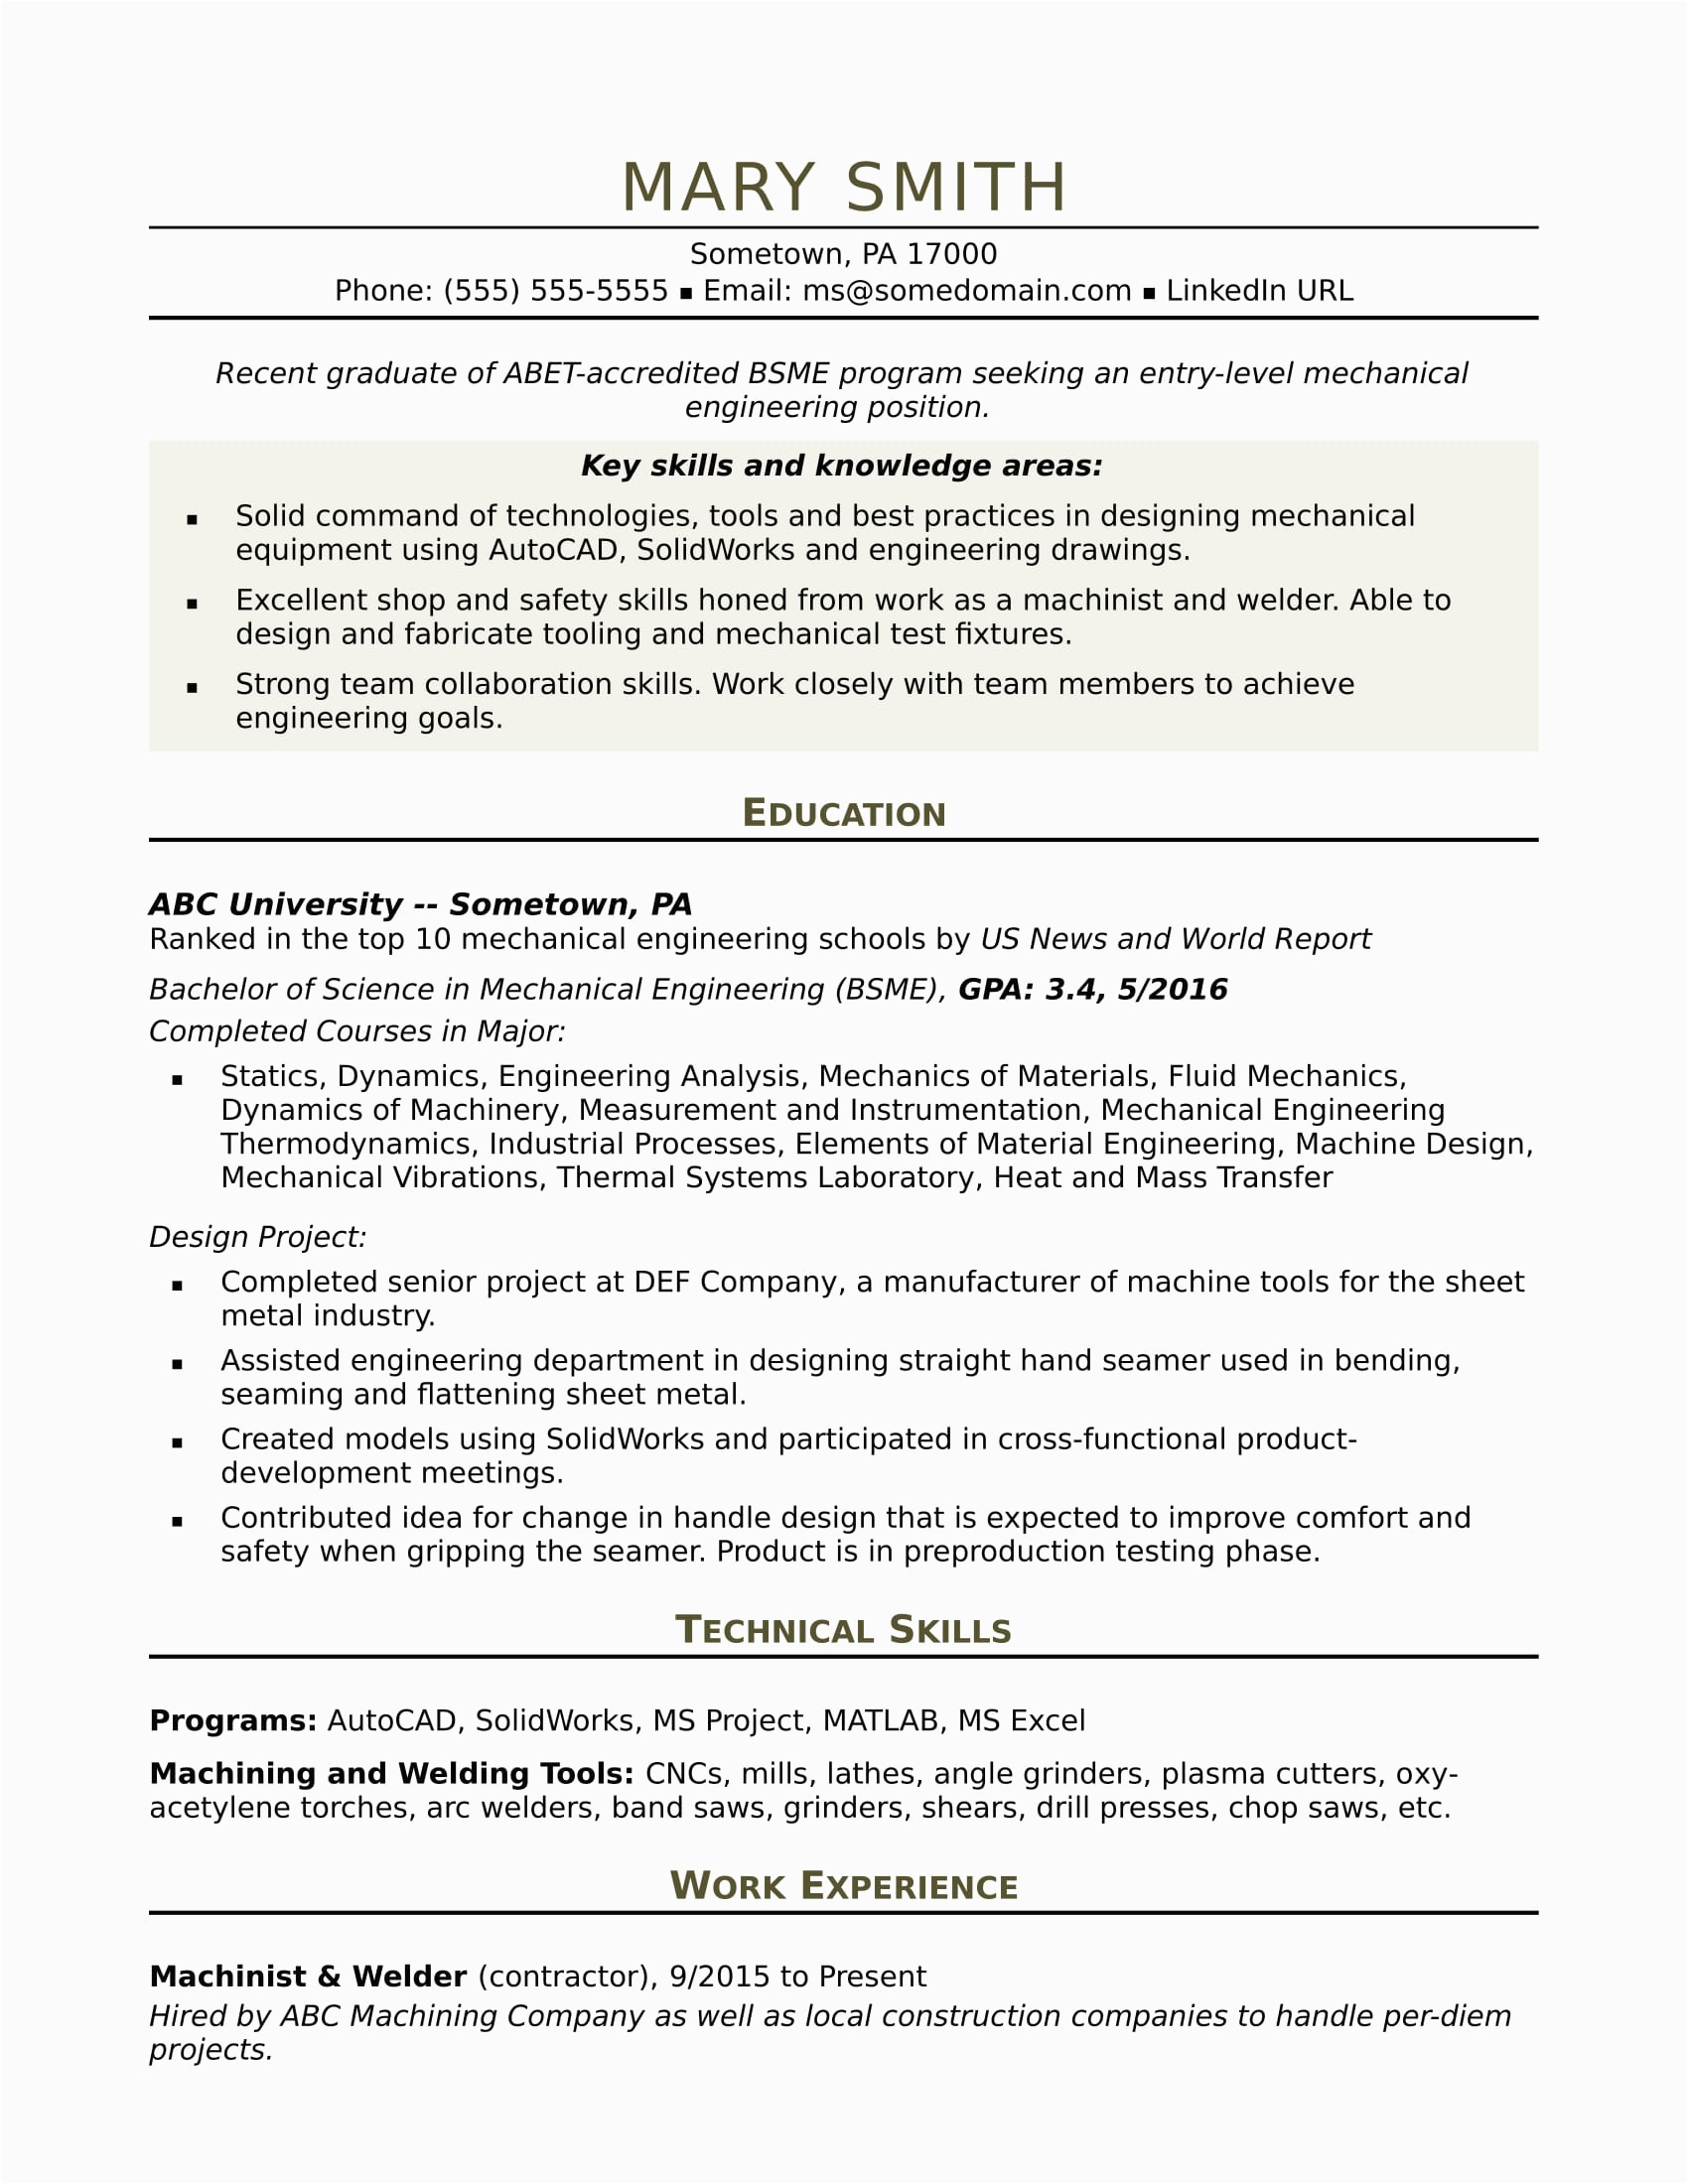 Sample Resume for Mechanical Engineer Fresh Graduate Sample Resume for An Entry Level Mechanical Engineer